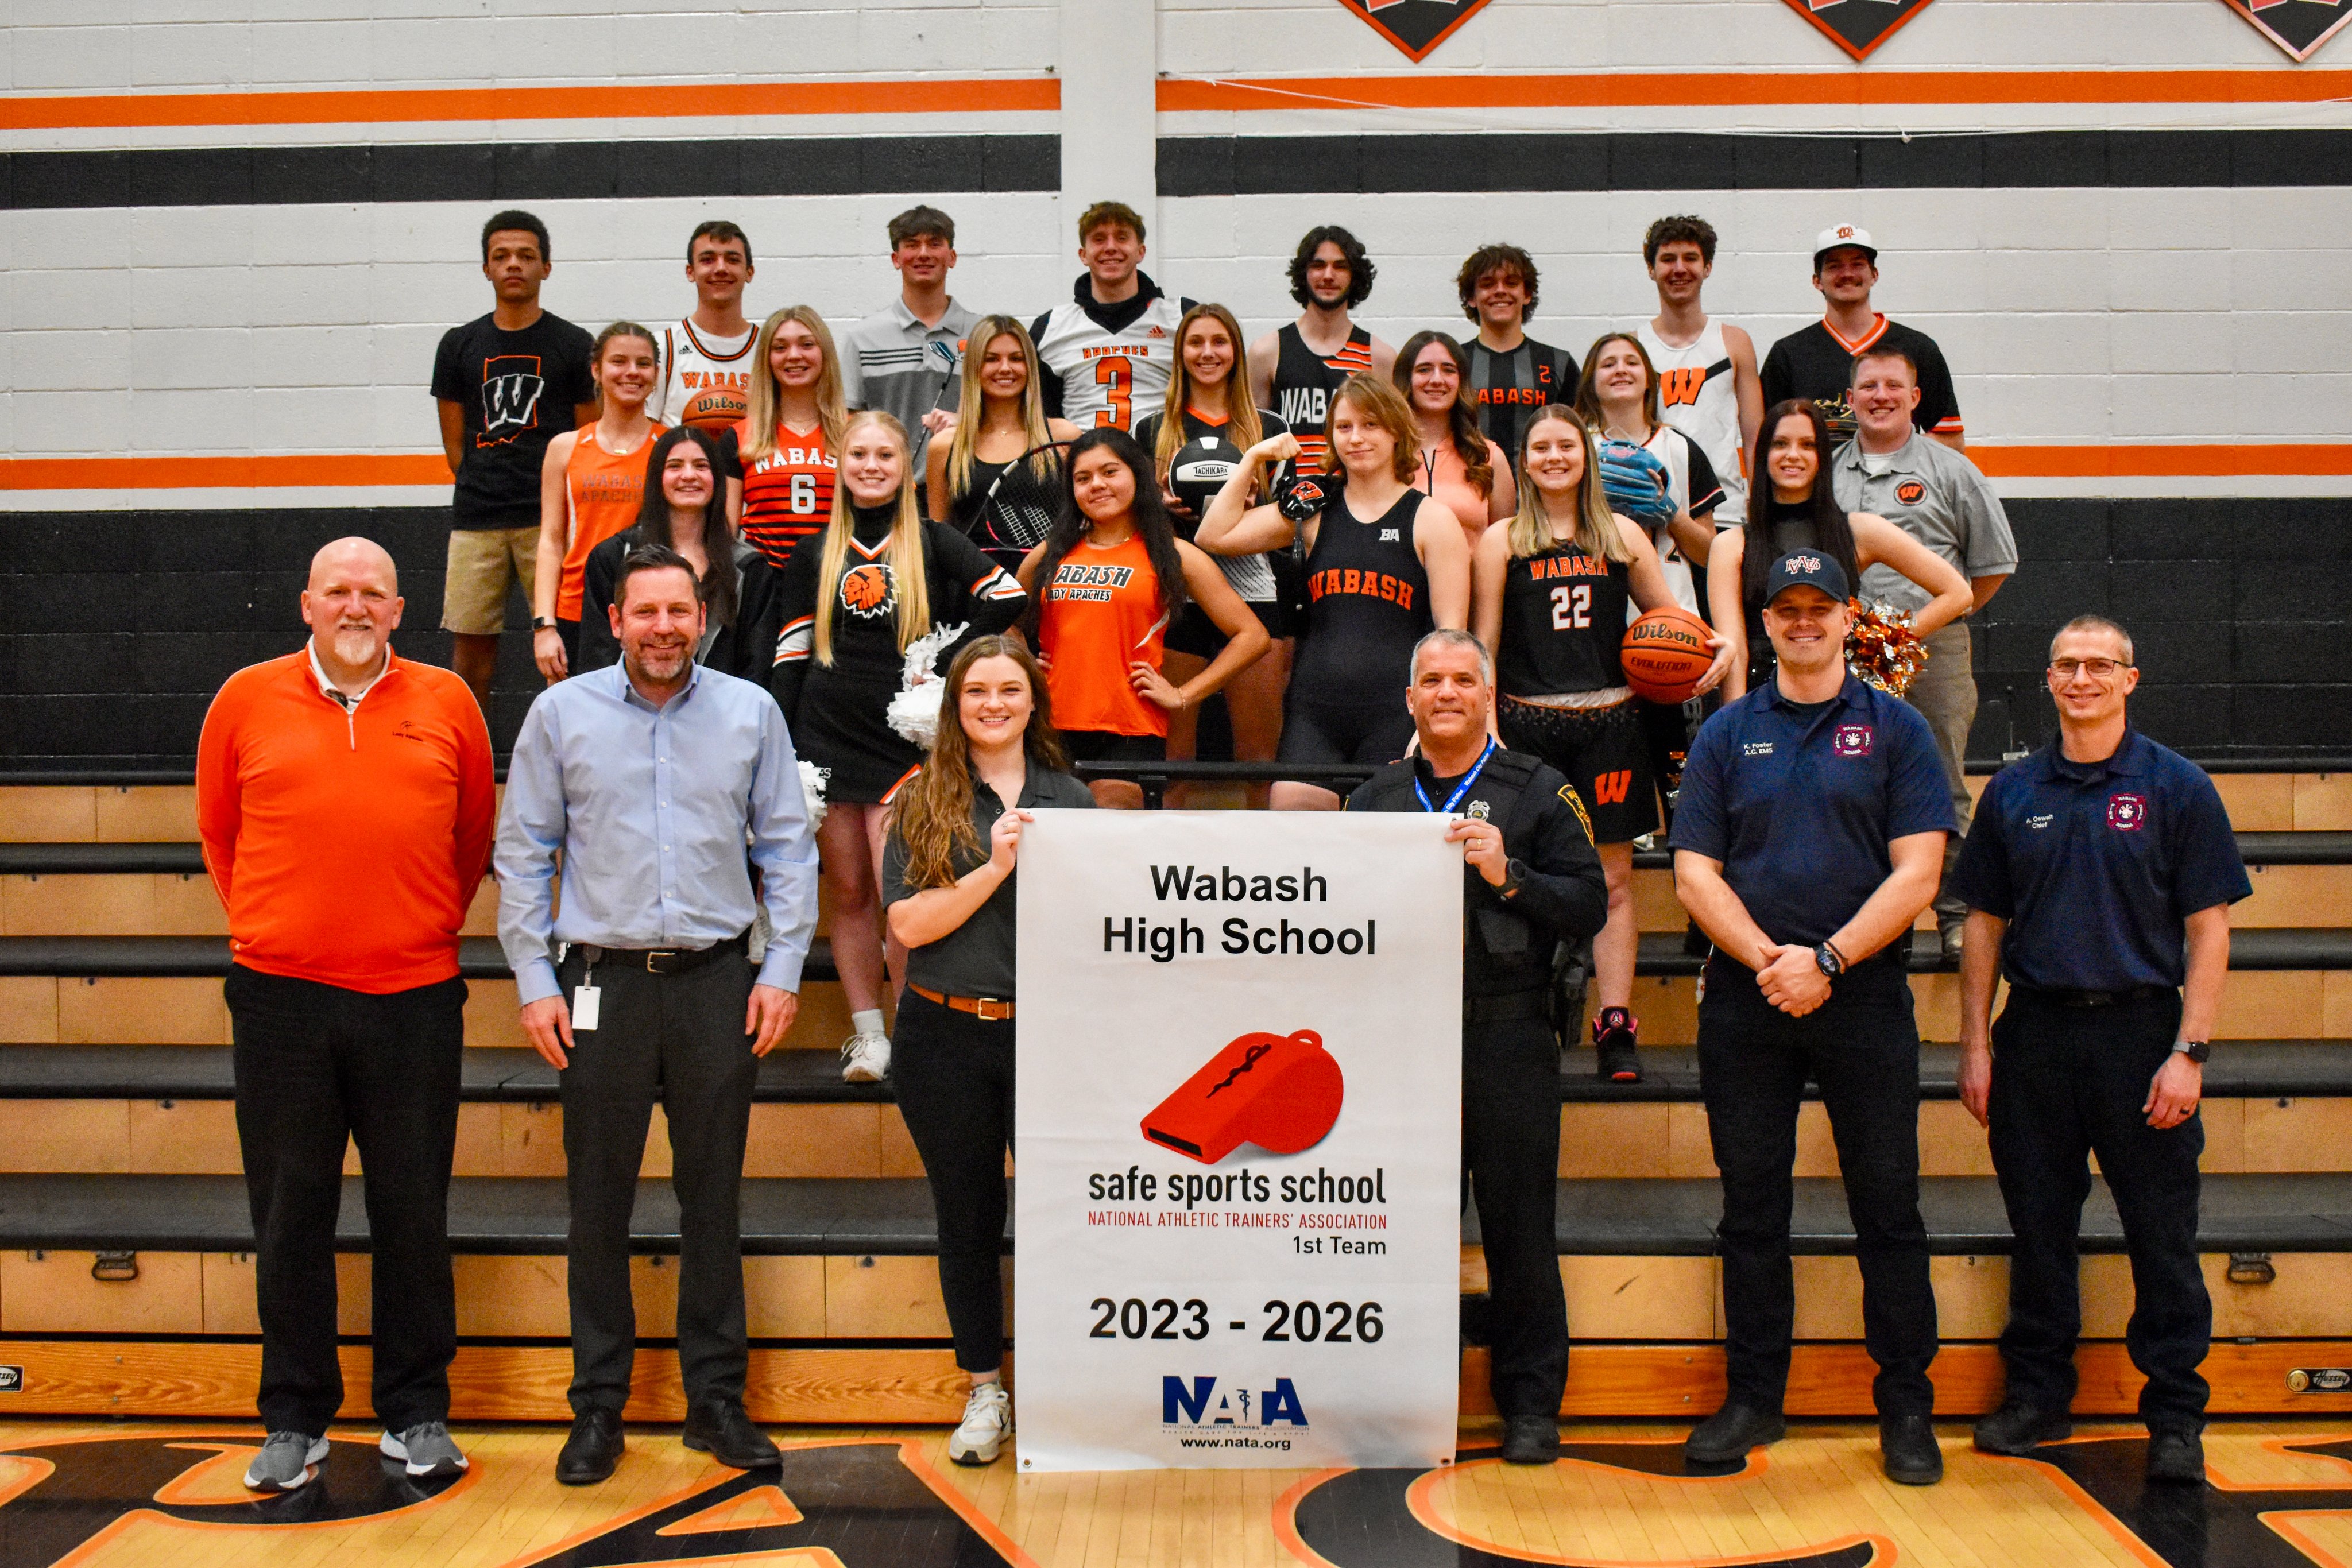 Wabash High School recognized as NATA Safe Sports School